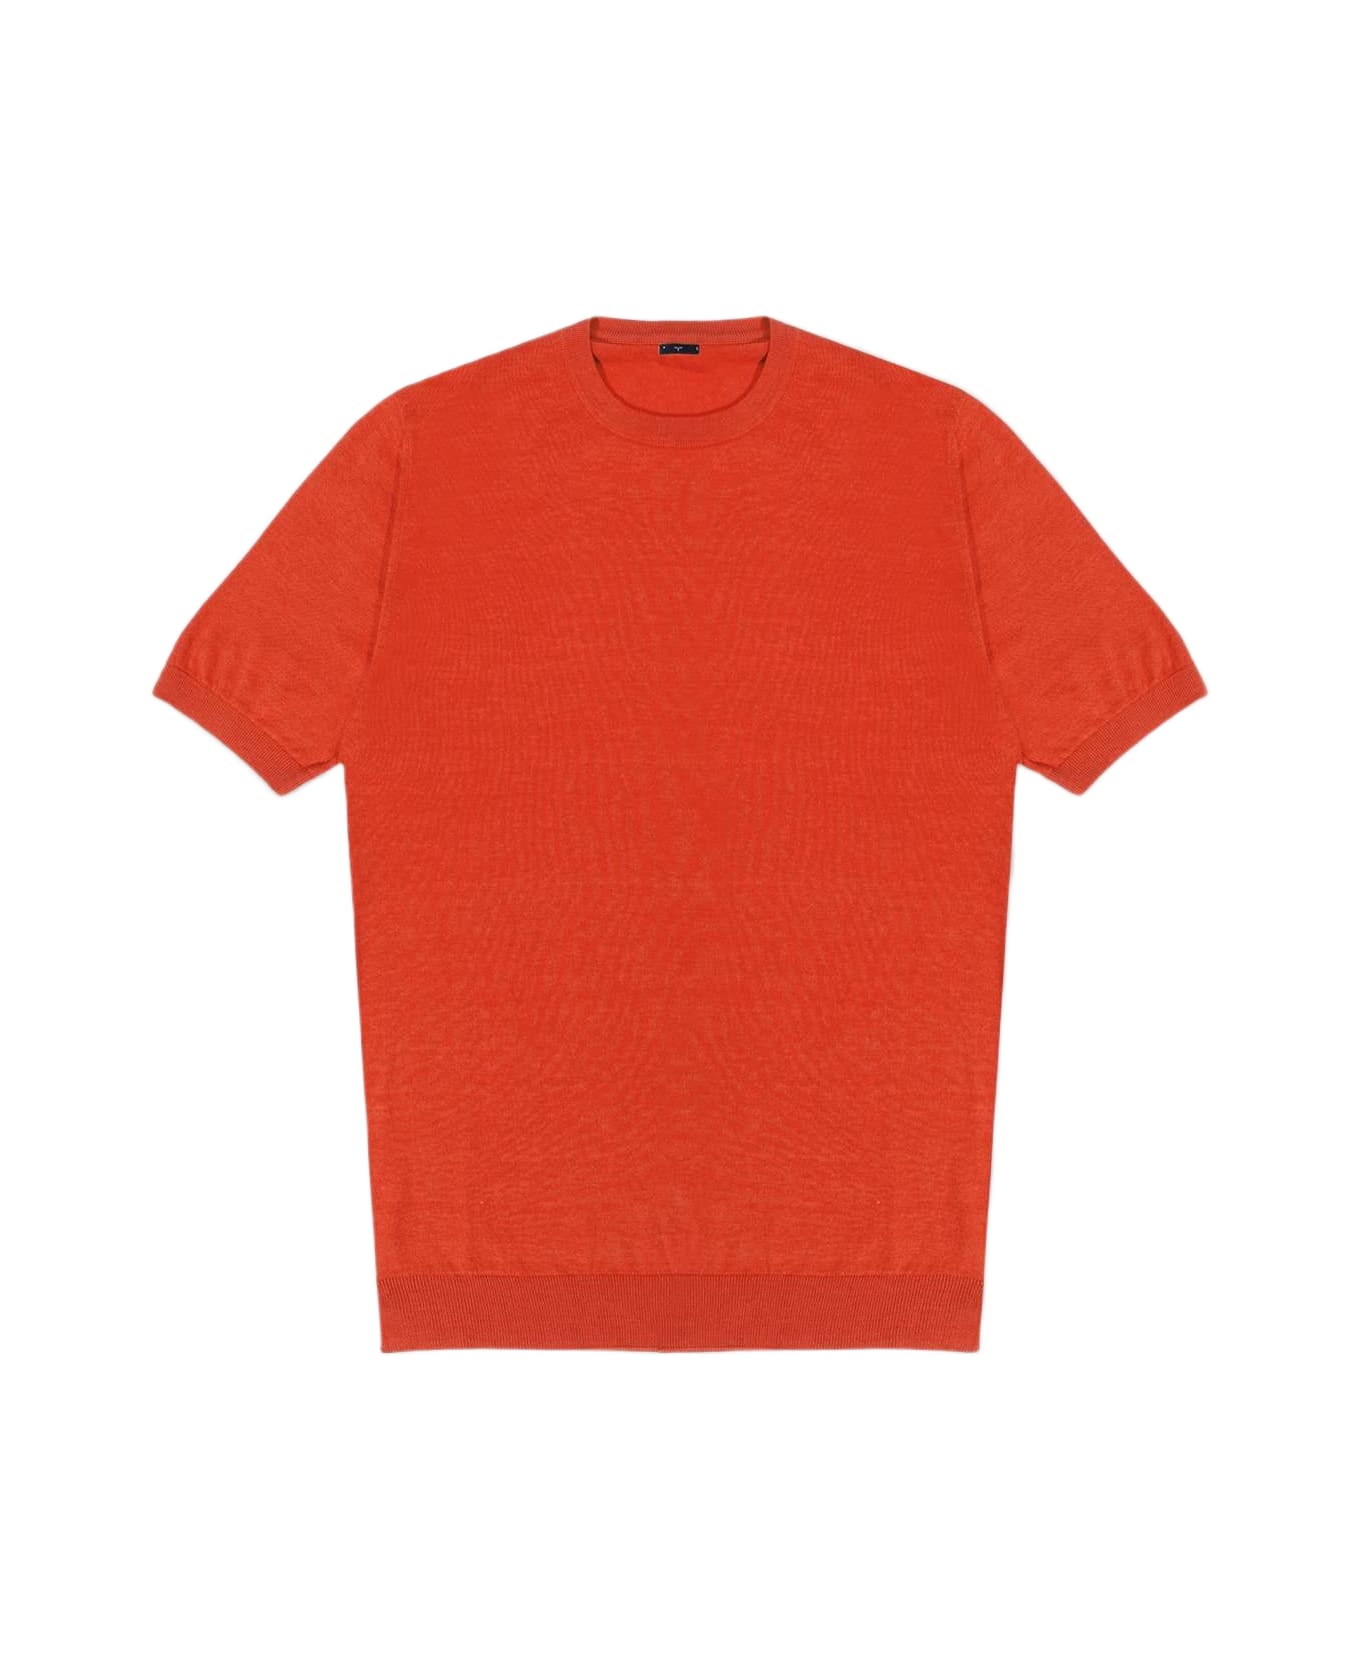 Larusmiani "roquebrune" Crewneck Sweater - Orange ニットウェア